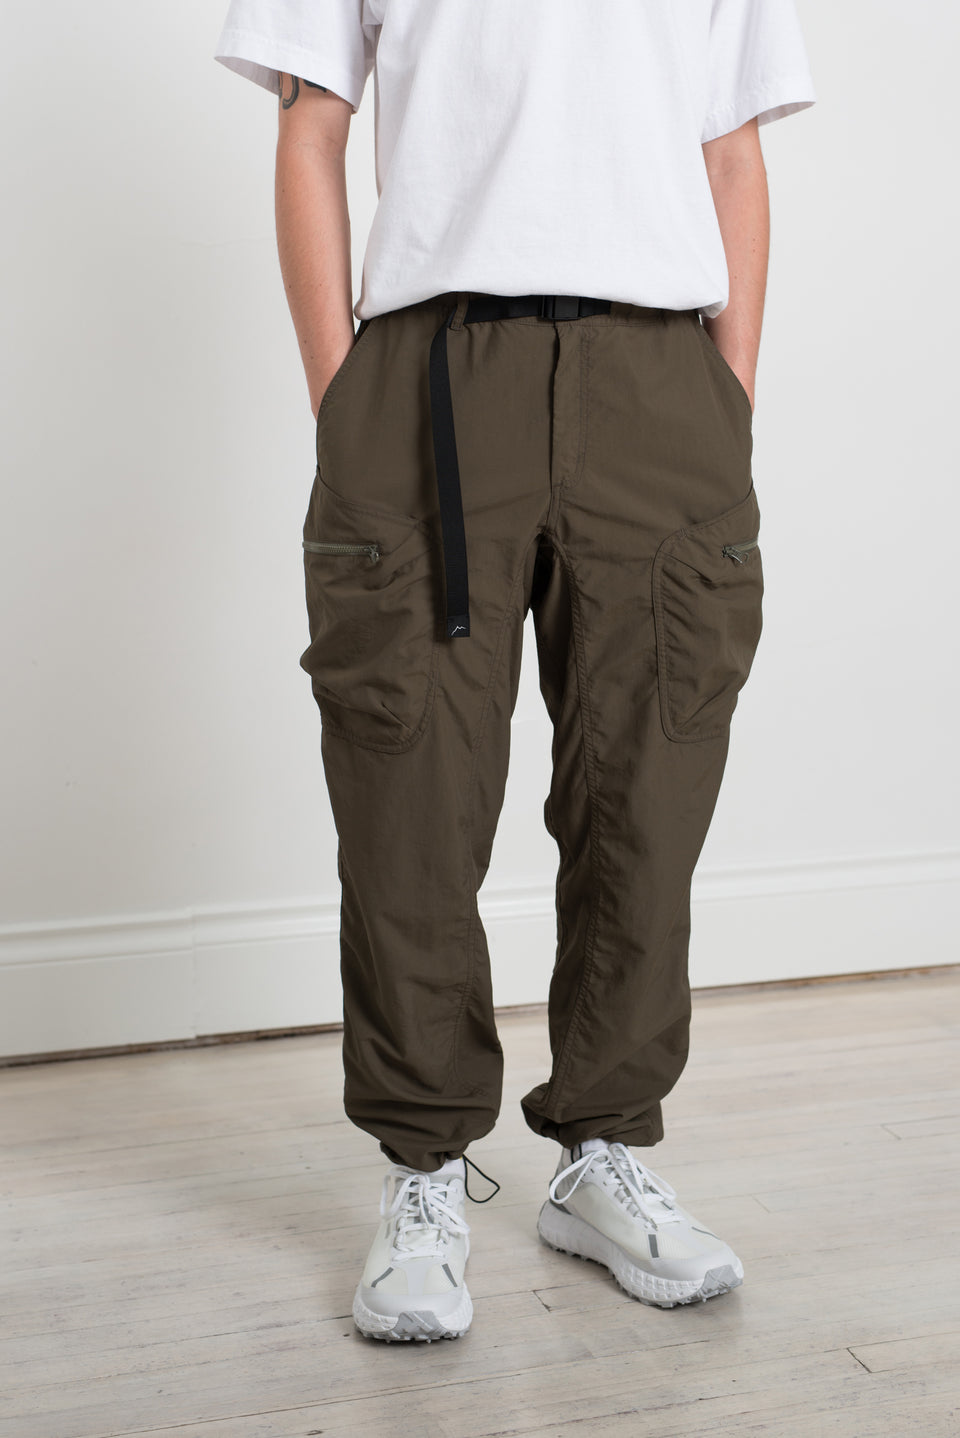 Crazy Men's Hip Hop Embroidery Baggy Jeans Denim Loose Trousers-30